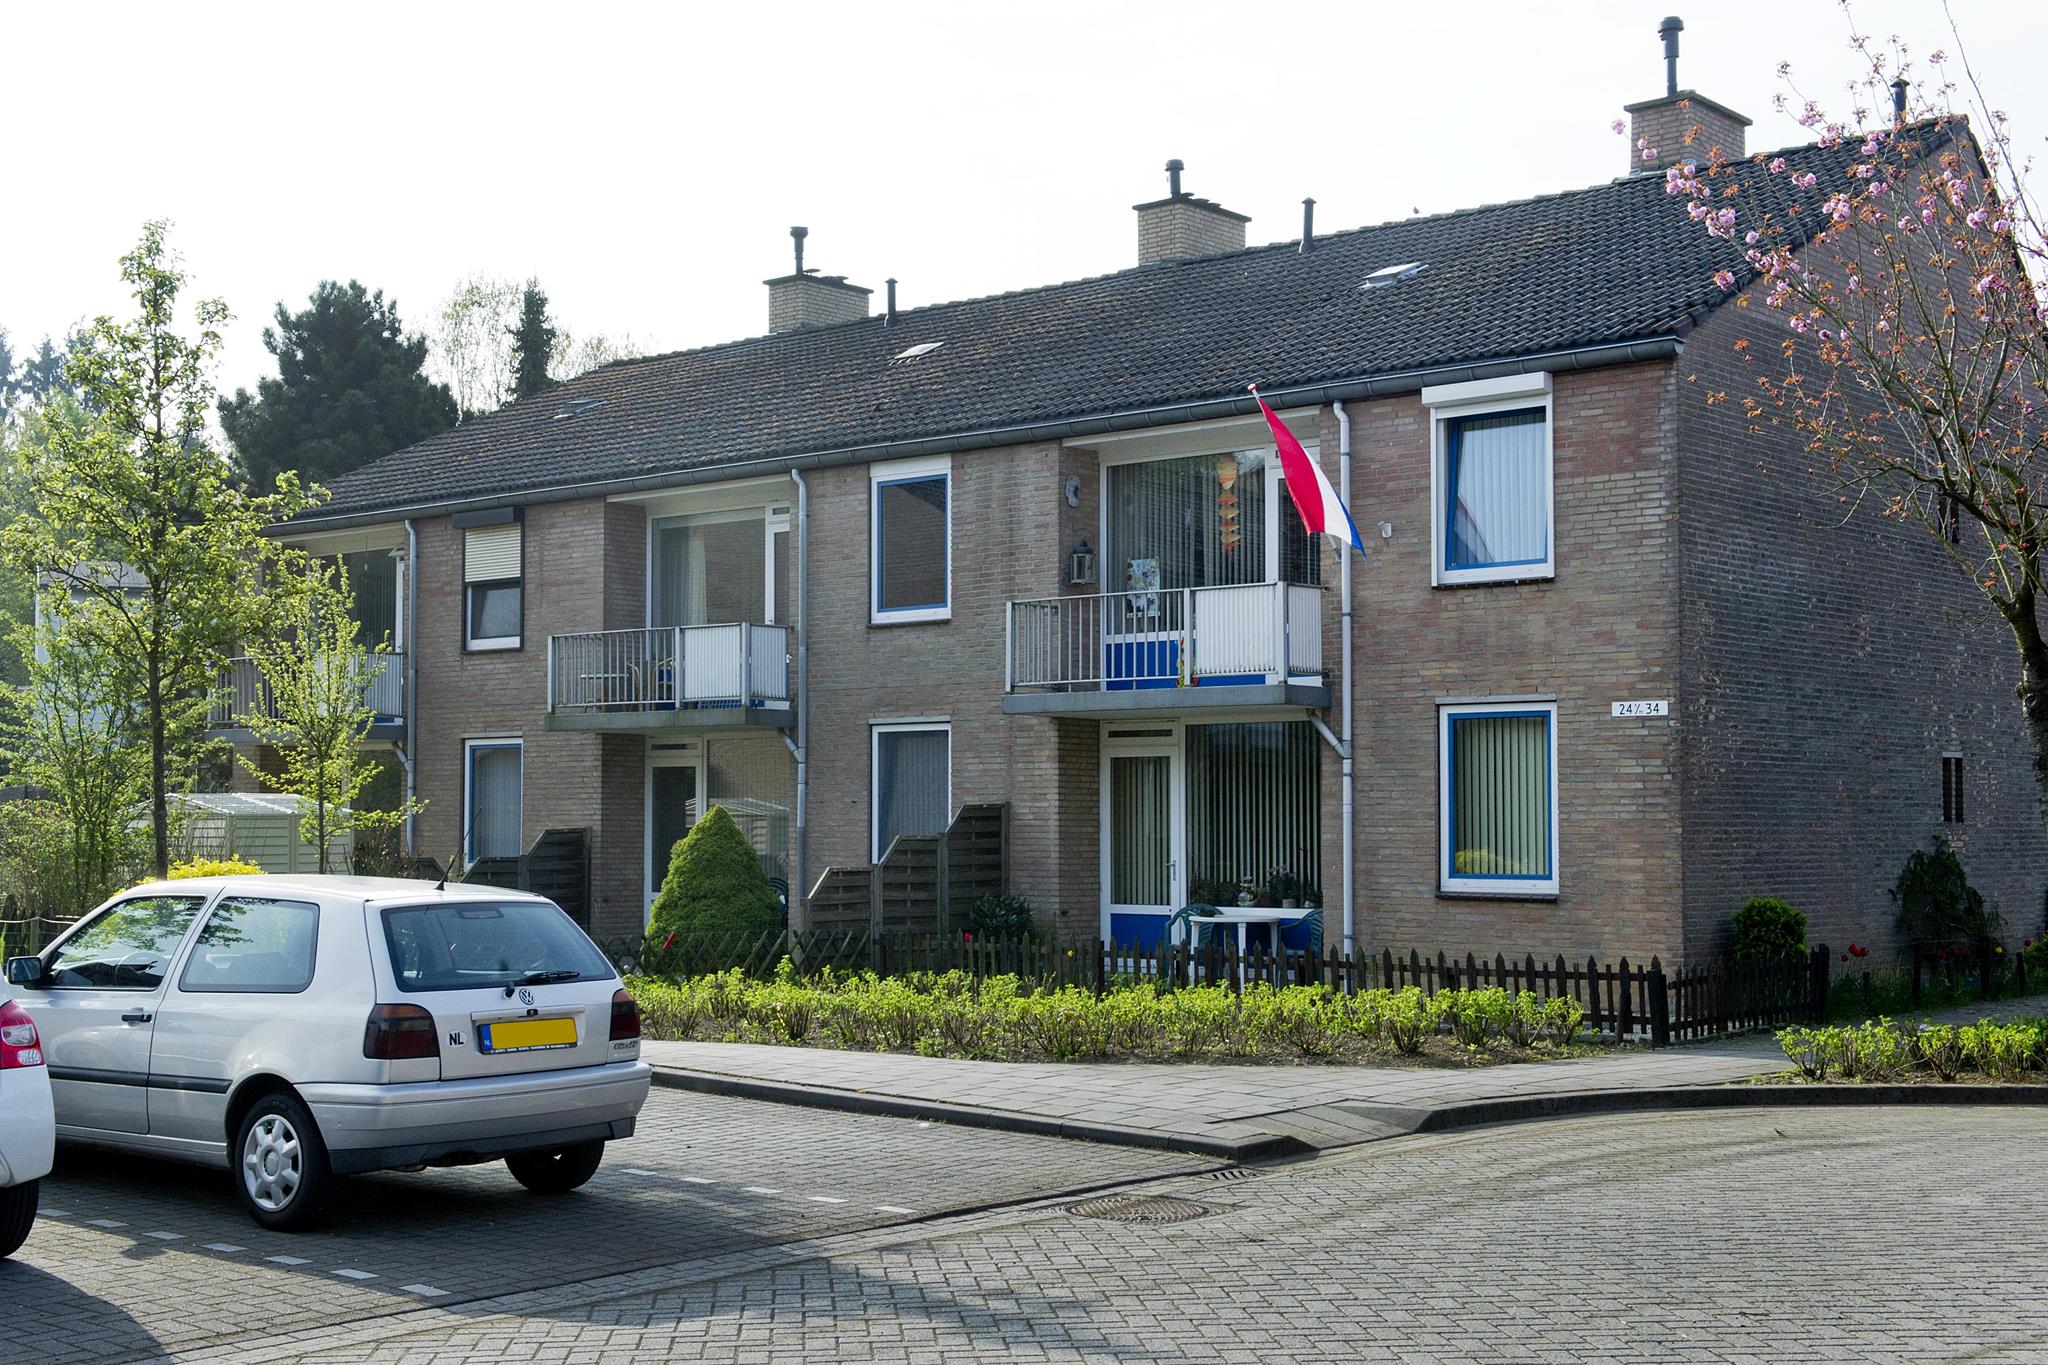 Napoleonstraat 30, 6301 WN Valkenburg, Nederland